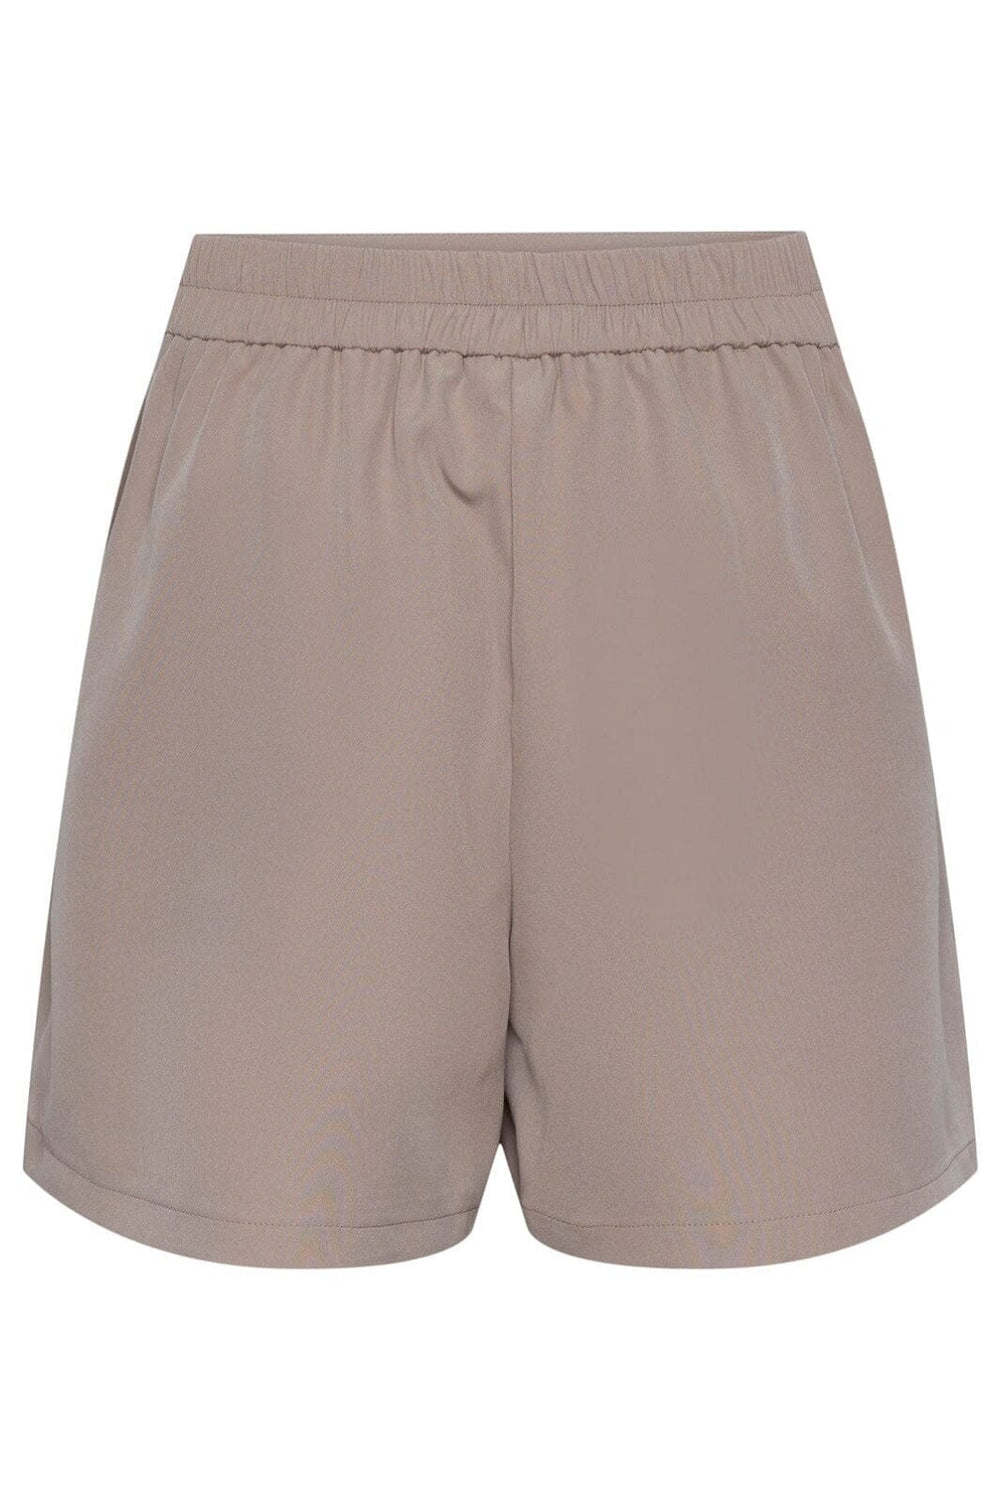 Pieces - Pcbossy Shorts - 4394621 Silver Mink Shorts 